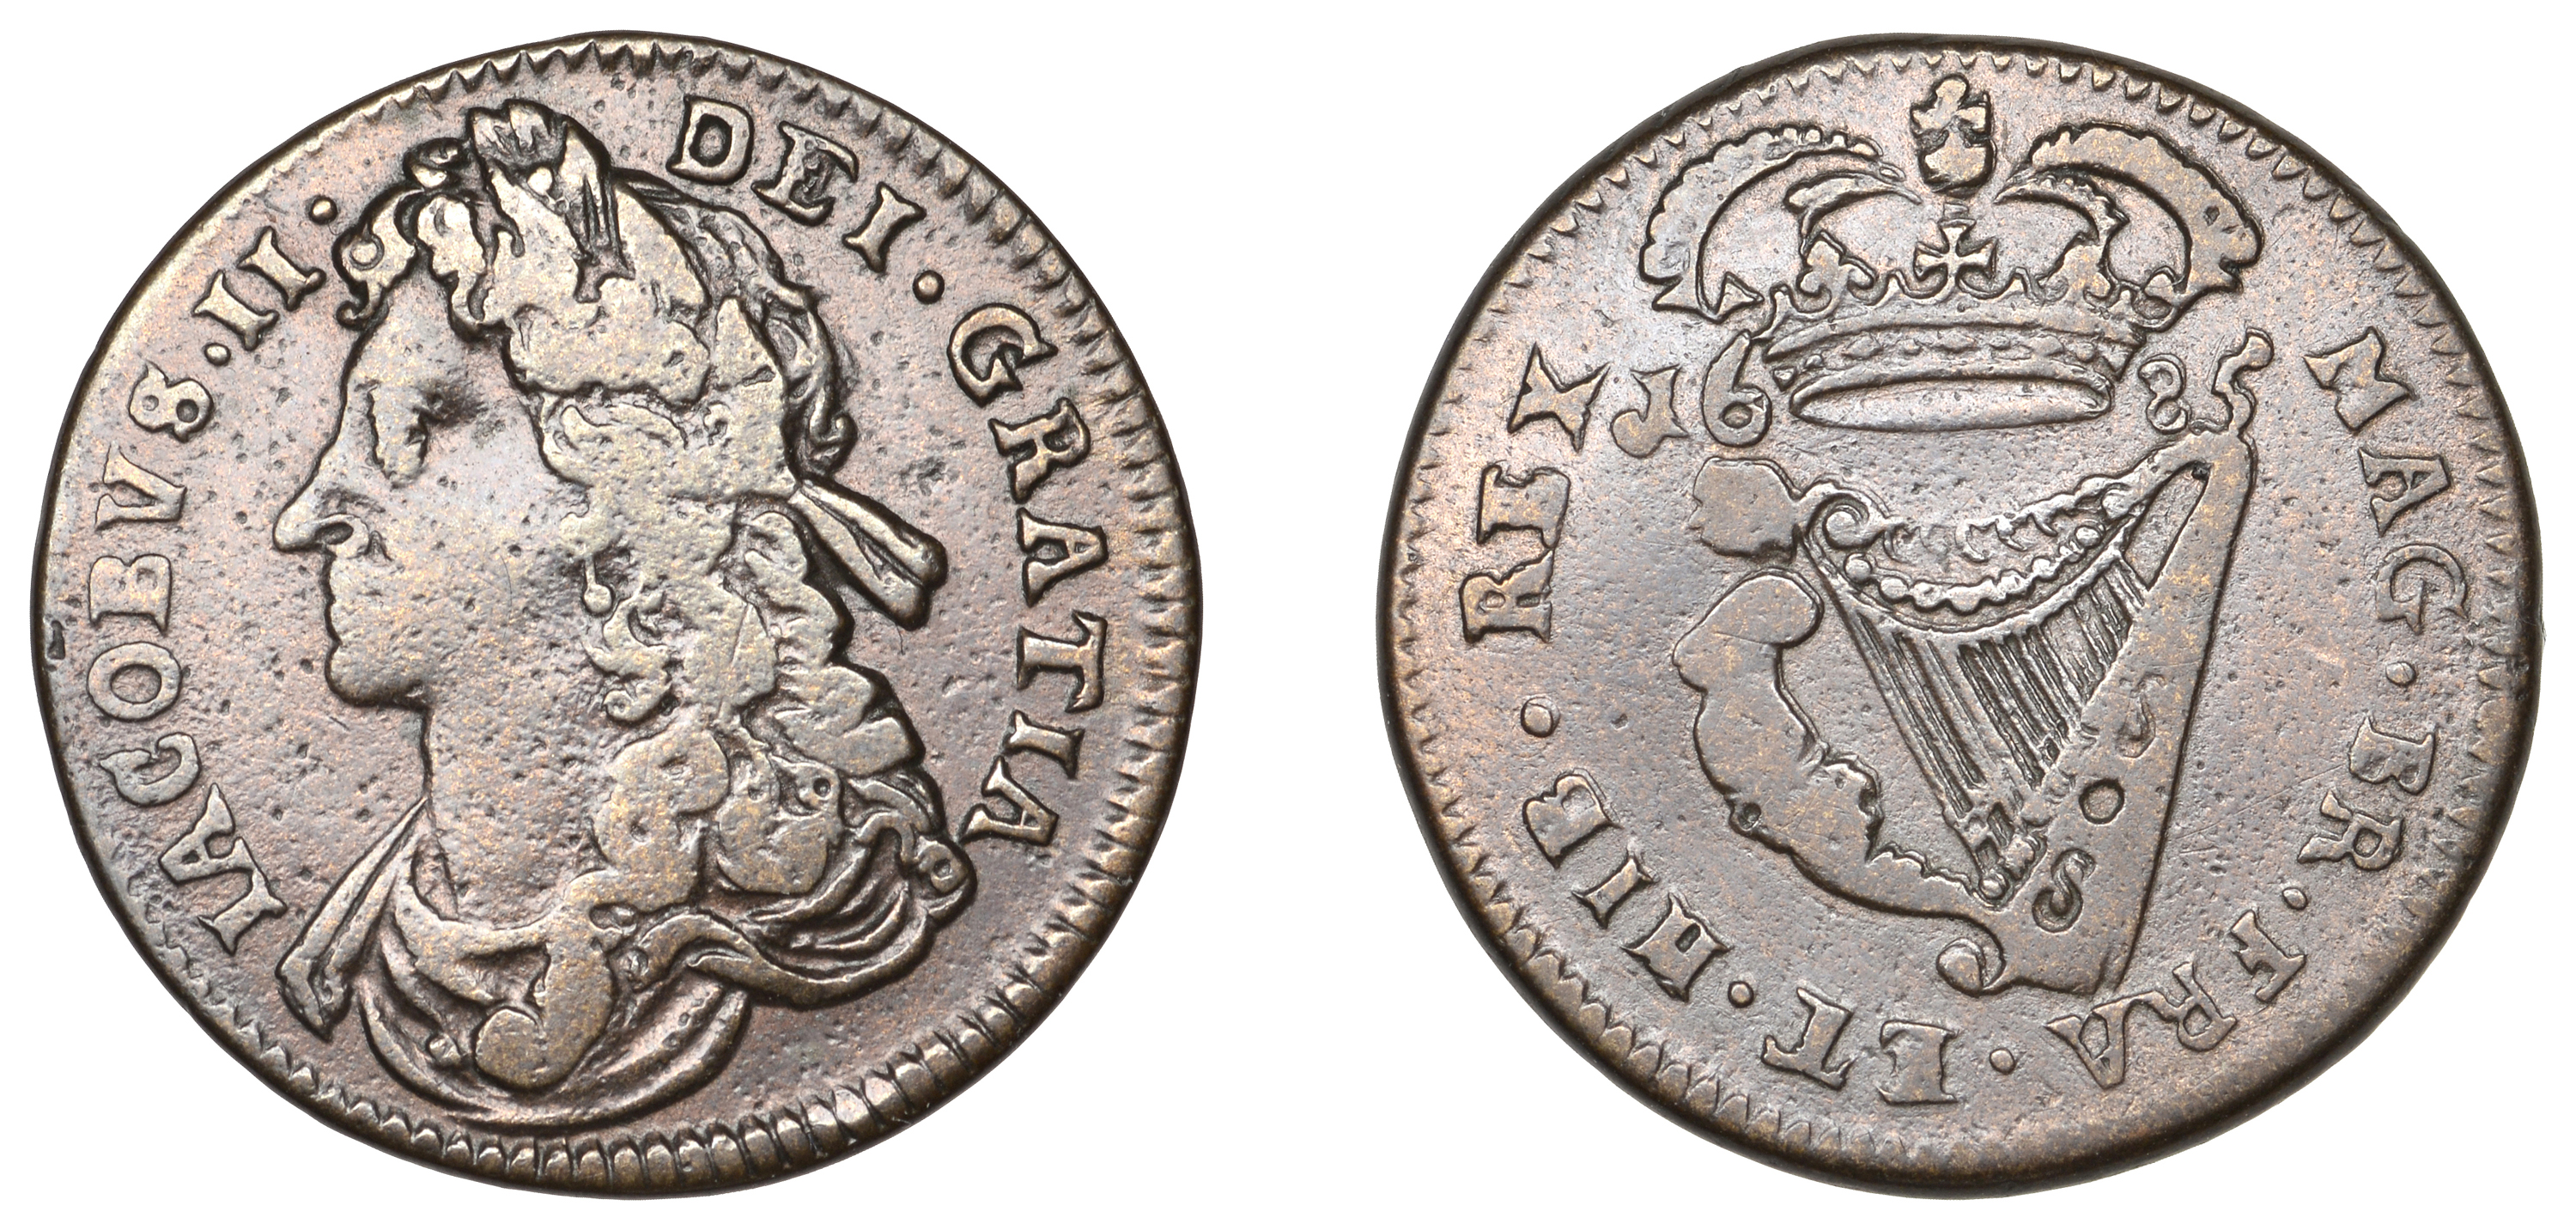 James II (1685-1691), Halfpenny, 1685, 7.26g/12h (S 6576). Good fine Â£80-Â£100